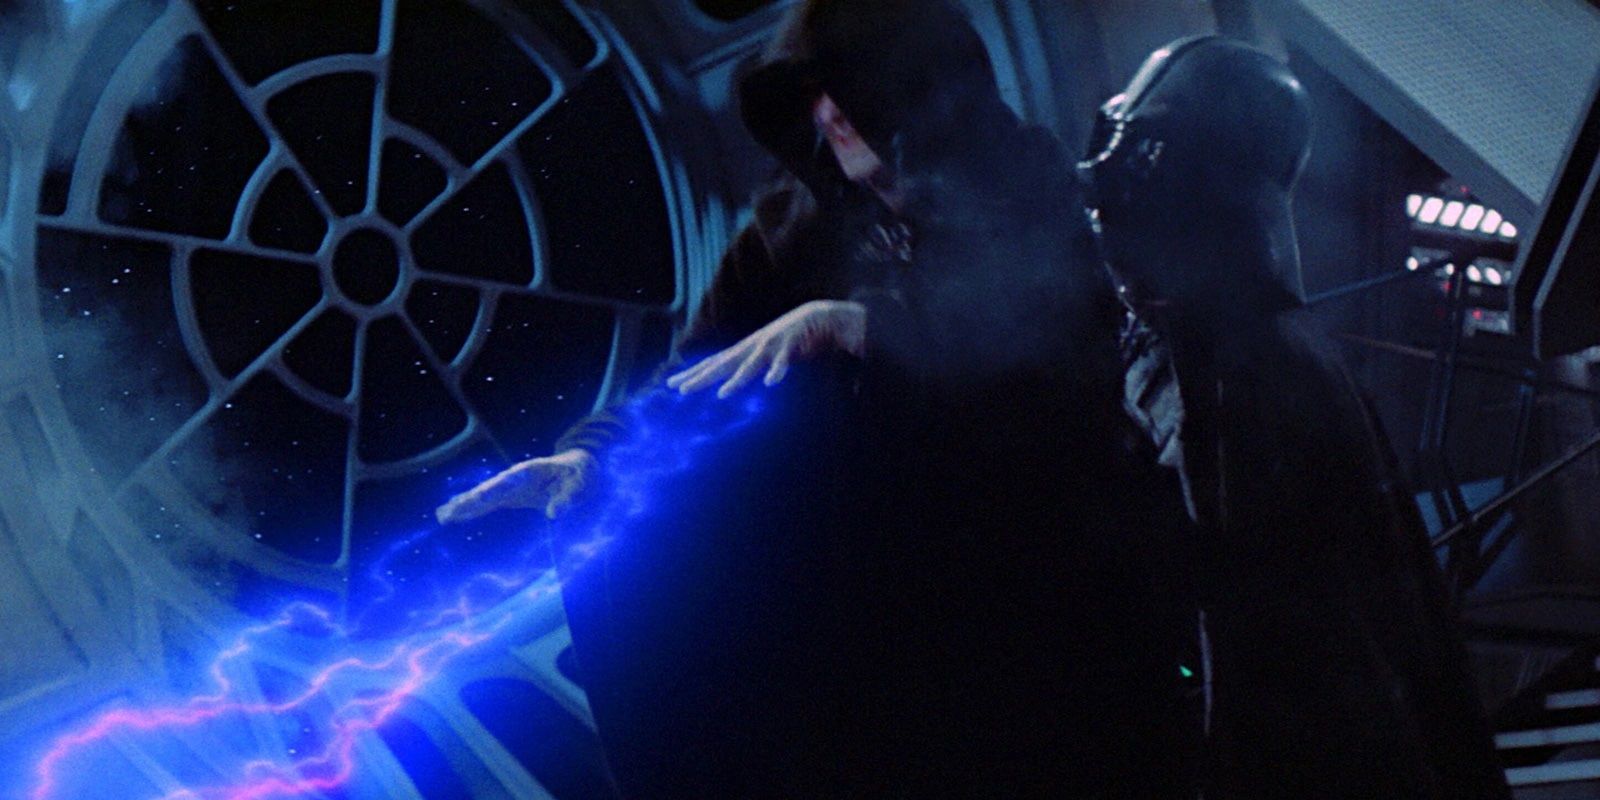 Vader kills the Emperor in Return of the Jedi